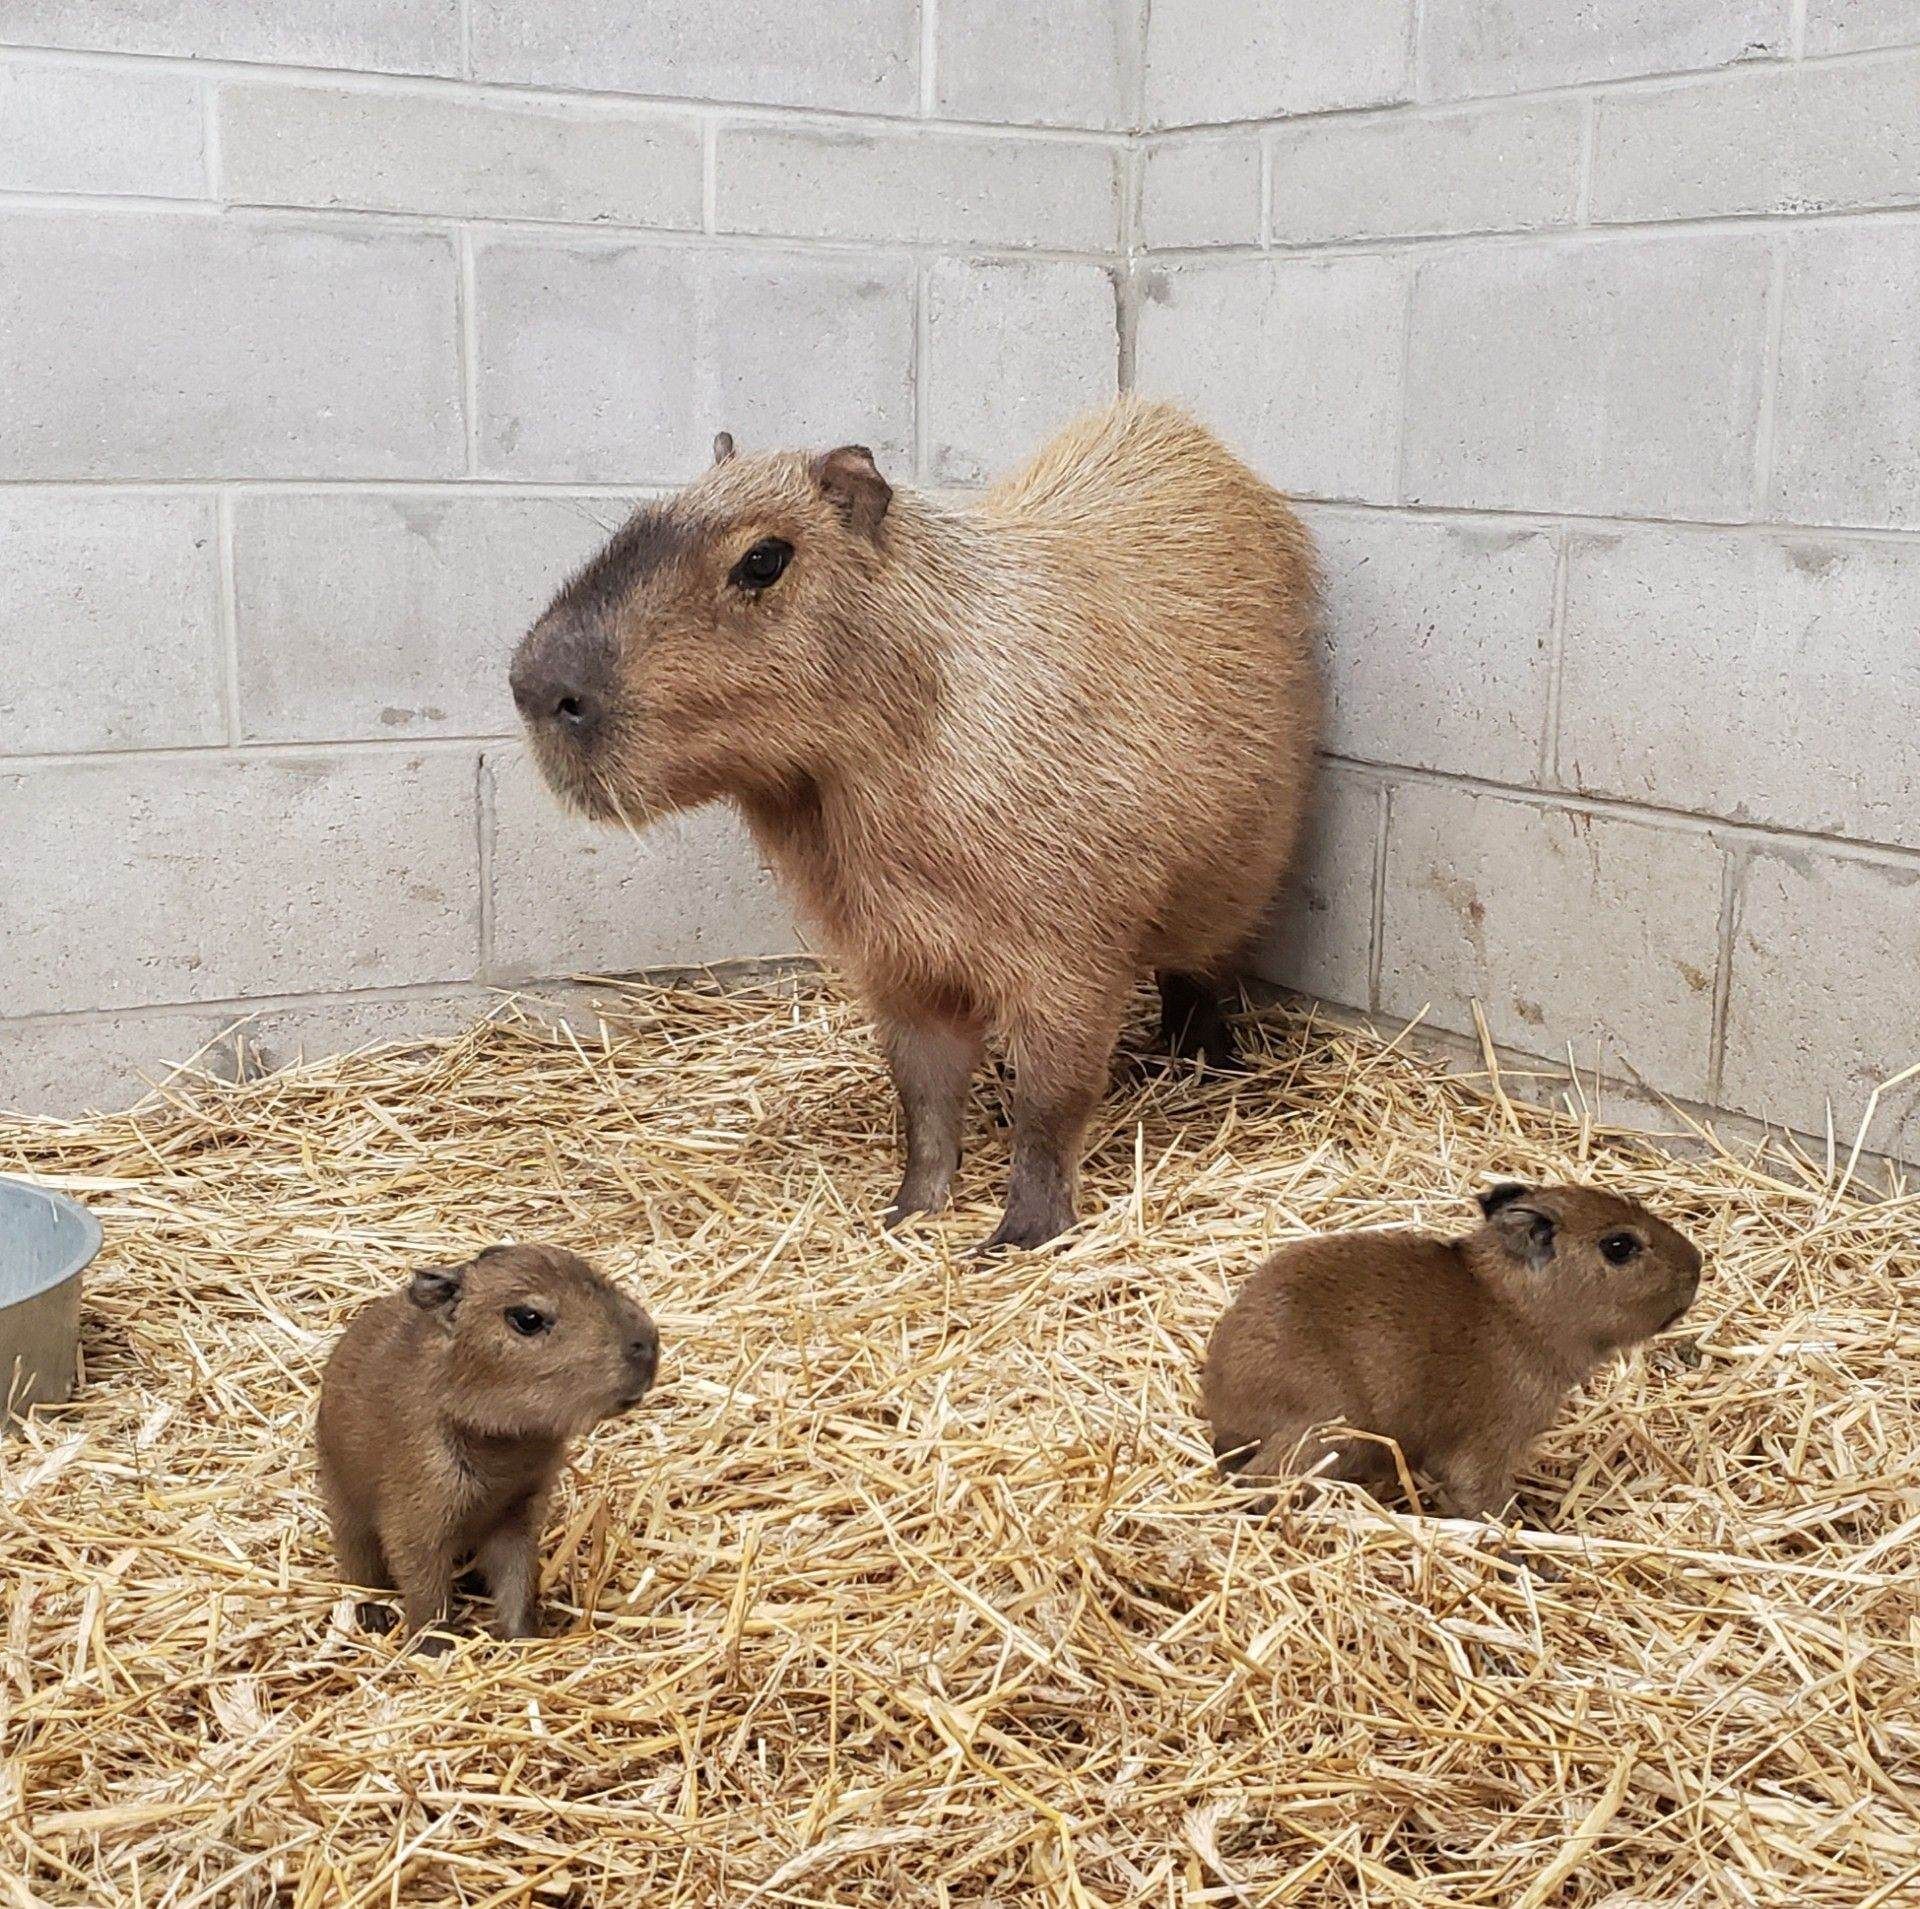 N.J. zoo welcomes 2nd set of capybara babies this year 